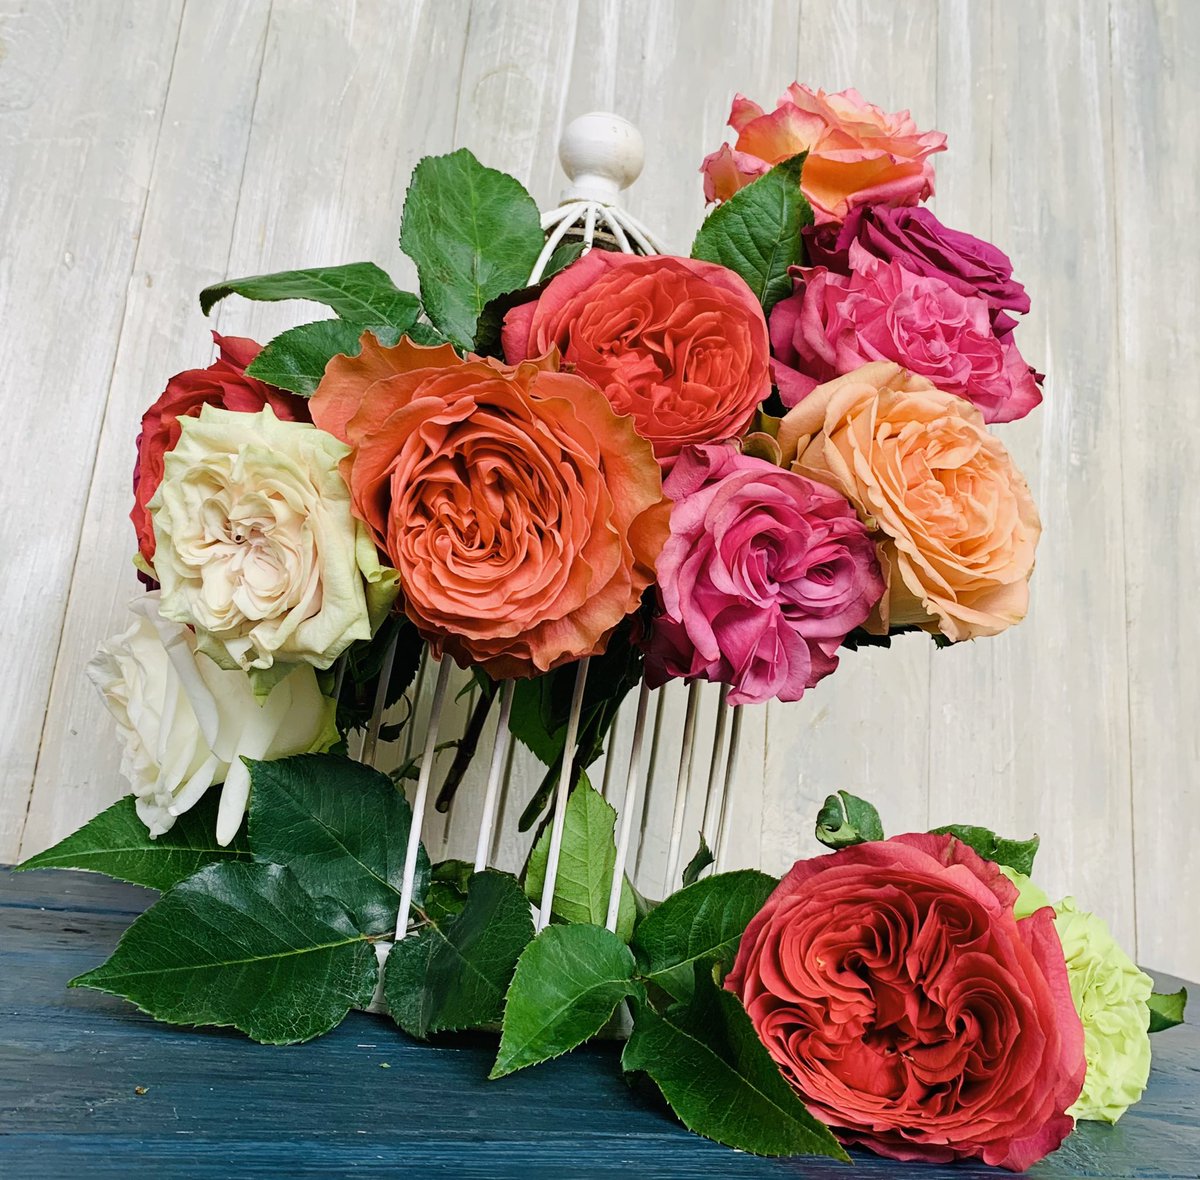 The best quality of garden roses just a few clicks away lahaciendaflowers.com #rosesfromecuador #sweetness #elegance #weshipdirect #americanfarminecuador #wecare #lhf #lahaciendaflowers